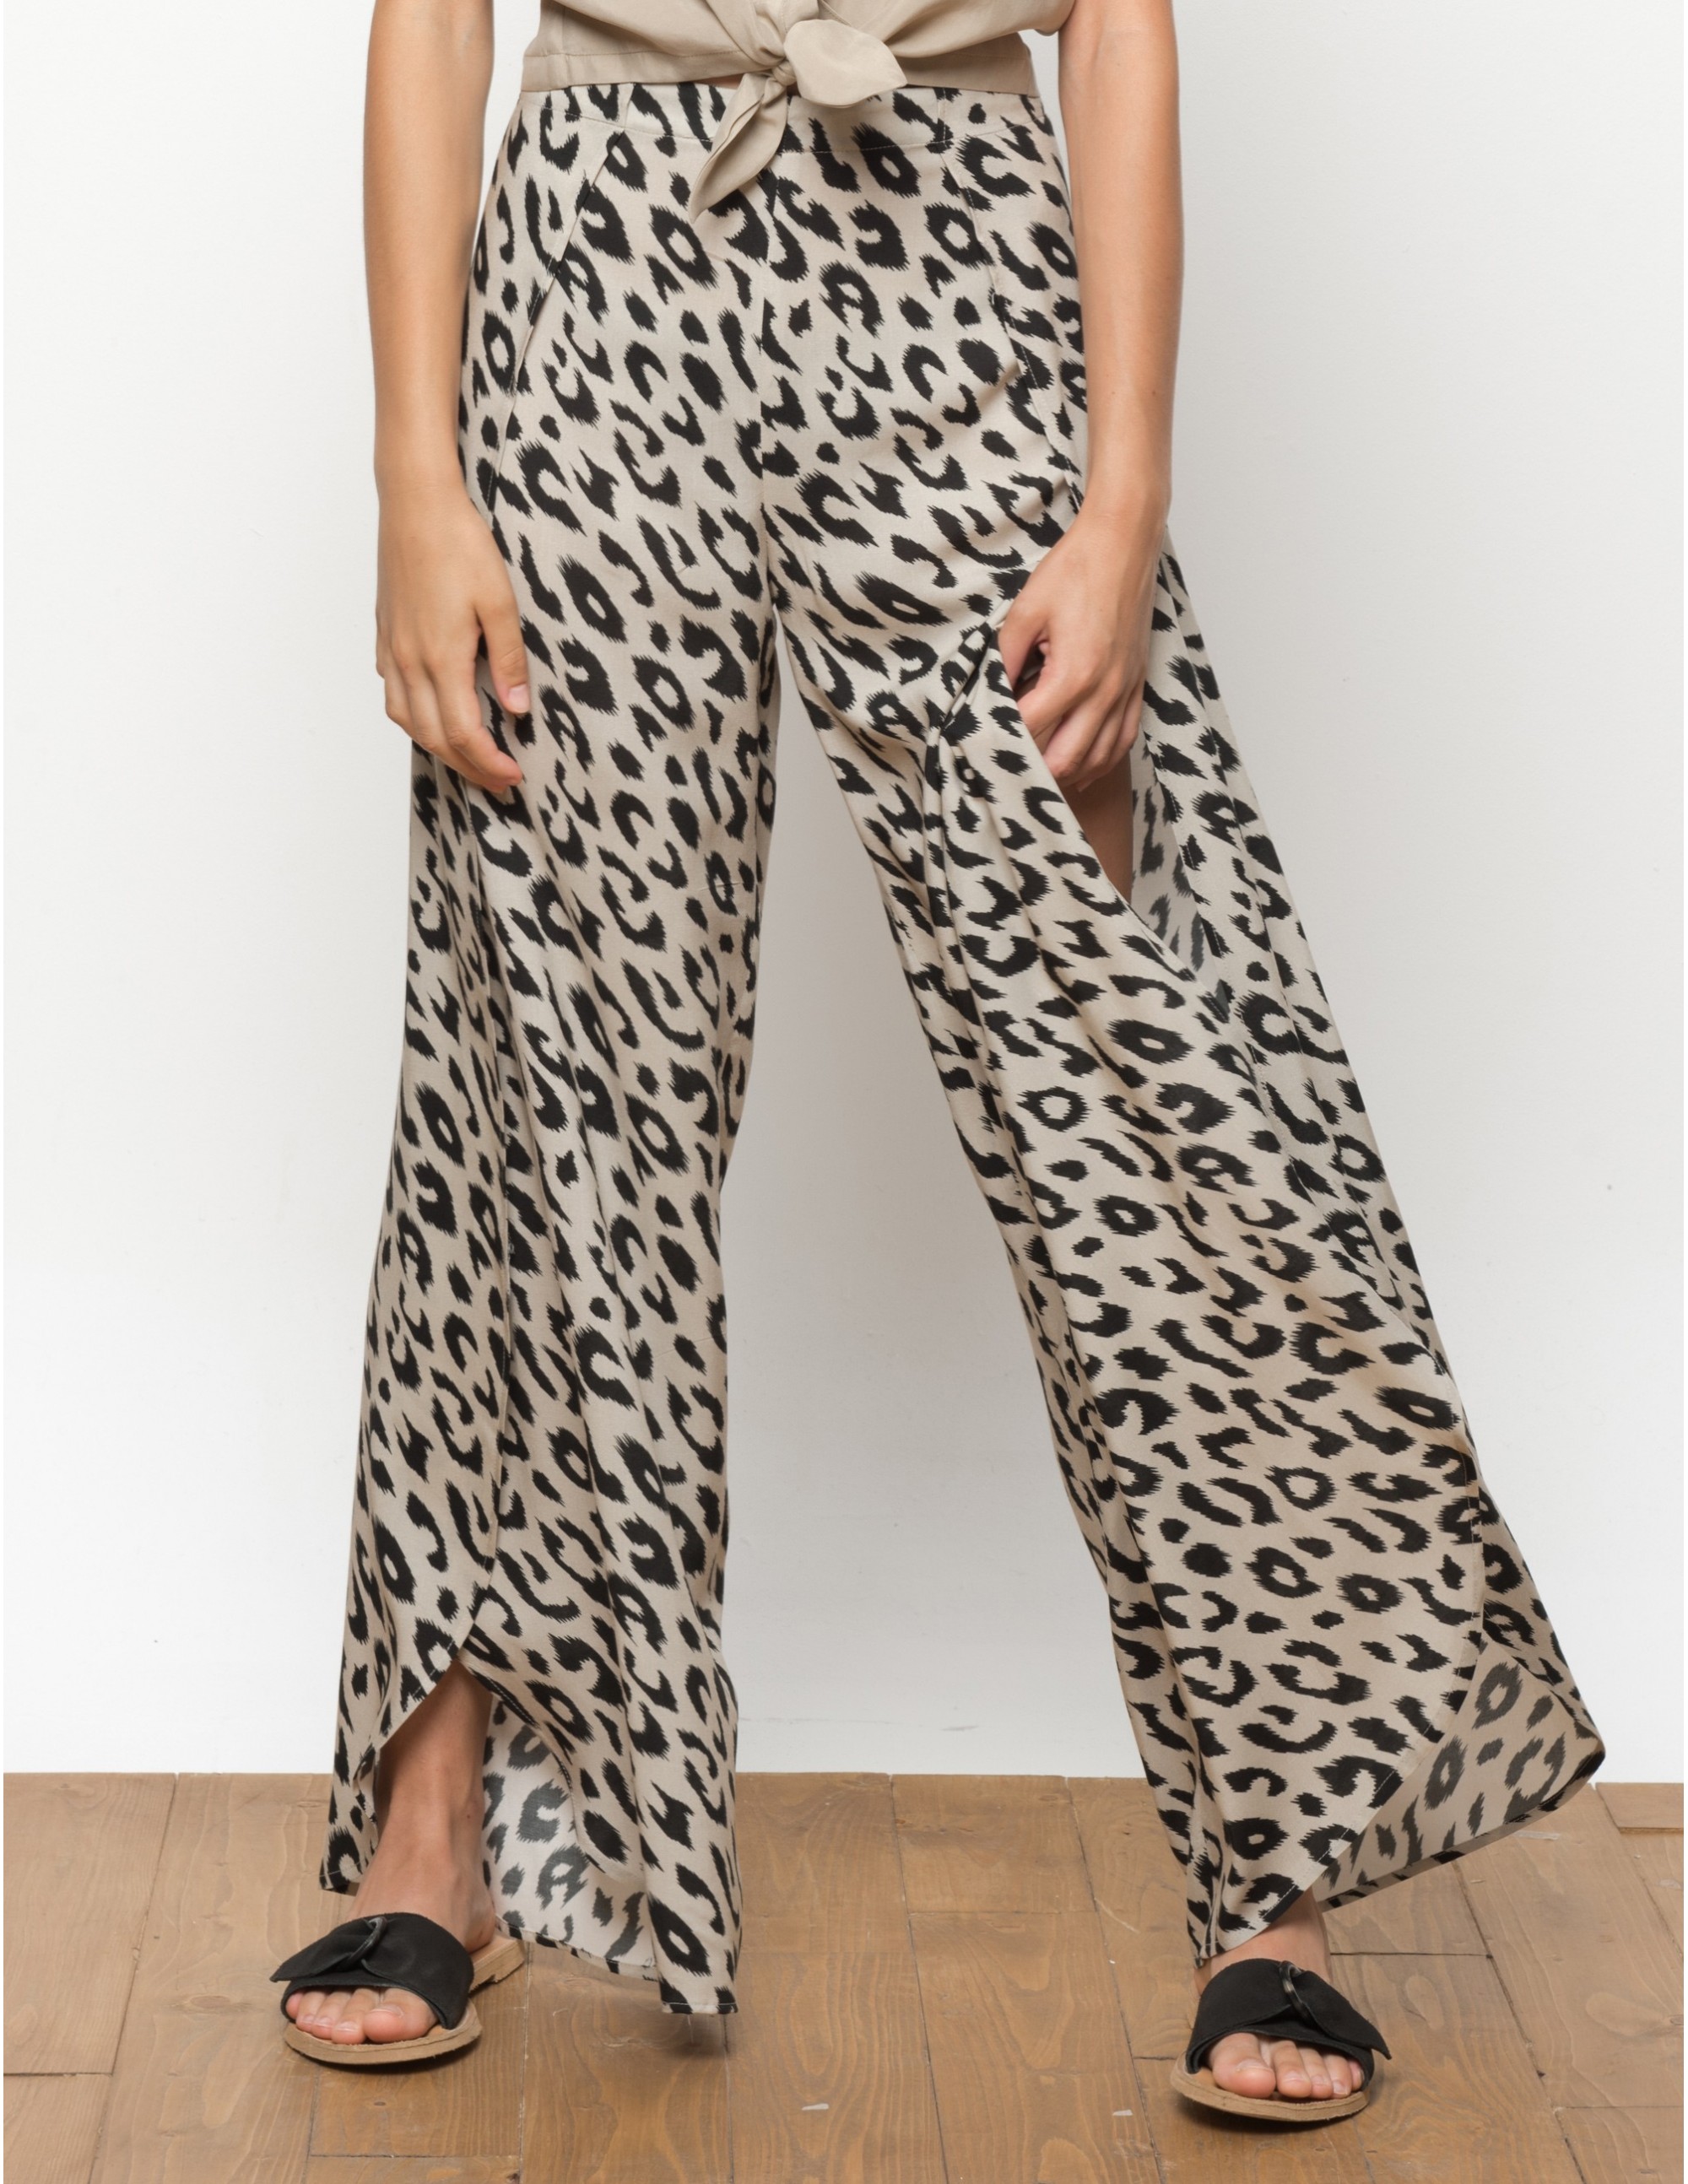 MISALI pantalones - Leopard - RESET PRIORITY